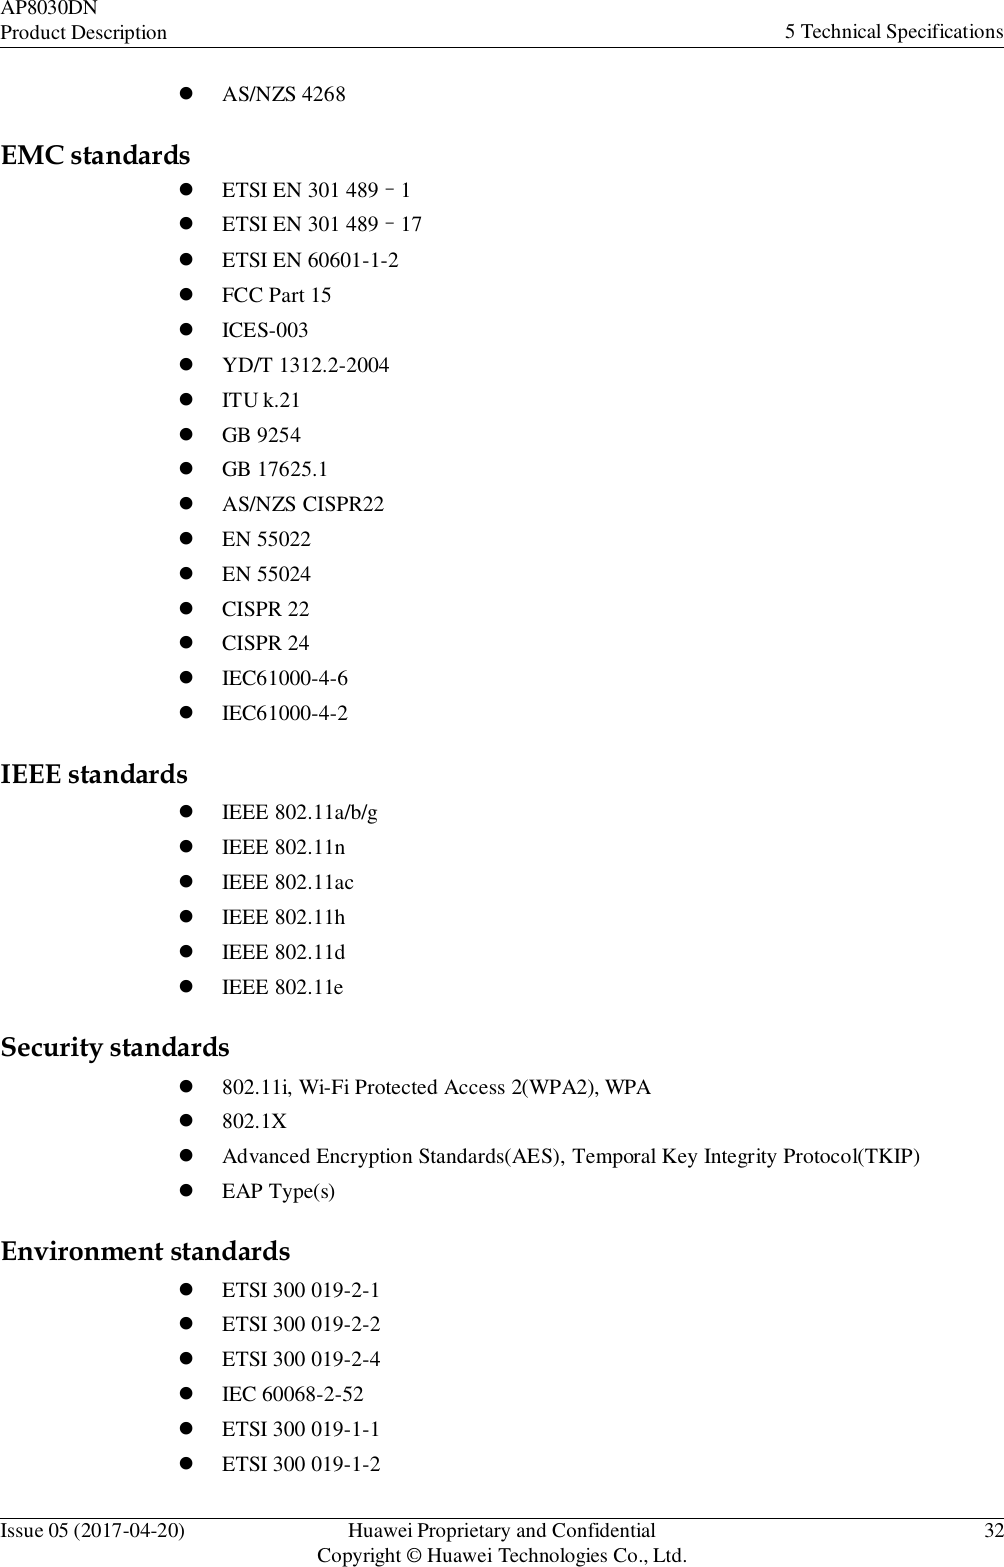 Issue 05 (2017-04-20) Huawei Proprietary and Confidential Copyright © Huawei Technologies Co., Ltd. 32 AP8030DN Product Description 5 Technical Specifications     AS/NZS 4268  EMC standards   ETSI EN 301 489–1   ETSI EN 301 489–17   ETSI EN 60601-1-2  FCC Part 15  ICES-003   YD/T 1312.2-2004  ITU k.21   GB 9254   GB 17625.1  AS/NZS CISPR22   EN 55022   EN 55024  CISPR 22  CISPR 24   IEC61000-4-6   IEC61000-4-2  IEEE standards   IEEE 802.11a/b/g   IEEE 802.11n  IEEE 802.11ac   IEEE 802.11h   IEEE 802.11d   IEEE 802.11e  Security standards  802.11i, Wi-Fi Protected Access 2(WPA2), WPA   802.1X  Advanced Encryption Standards(AES), Temporal Key Integrity Protocol(TKIP)  EAP Type(s)  Environment standards   ETSI 300 019-2-1   ETSI 300 019-2-2   ETSI 300 019-2-4   IEC 60068-2-52   ETSI 300 019-1-1   ETSI 300 019-1-2 